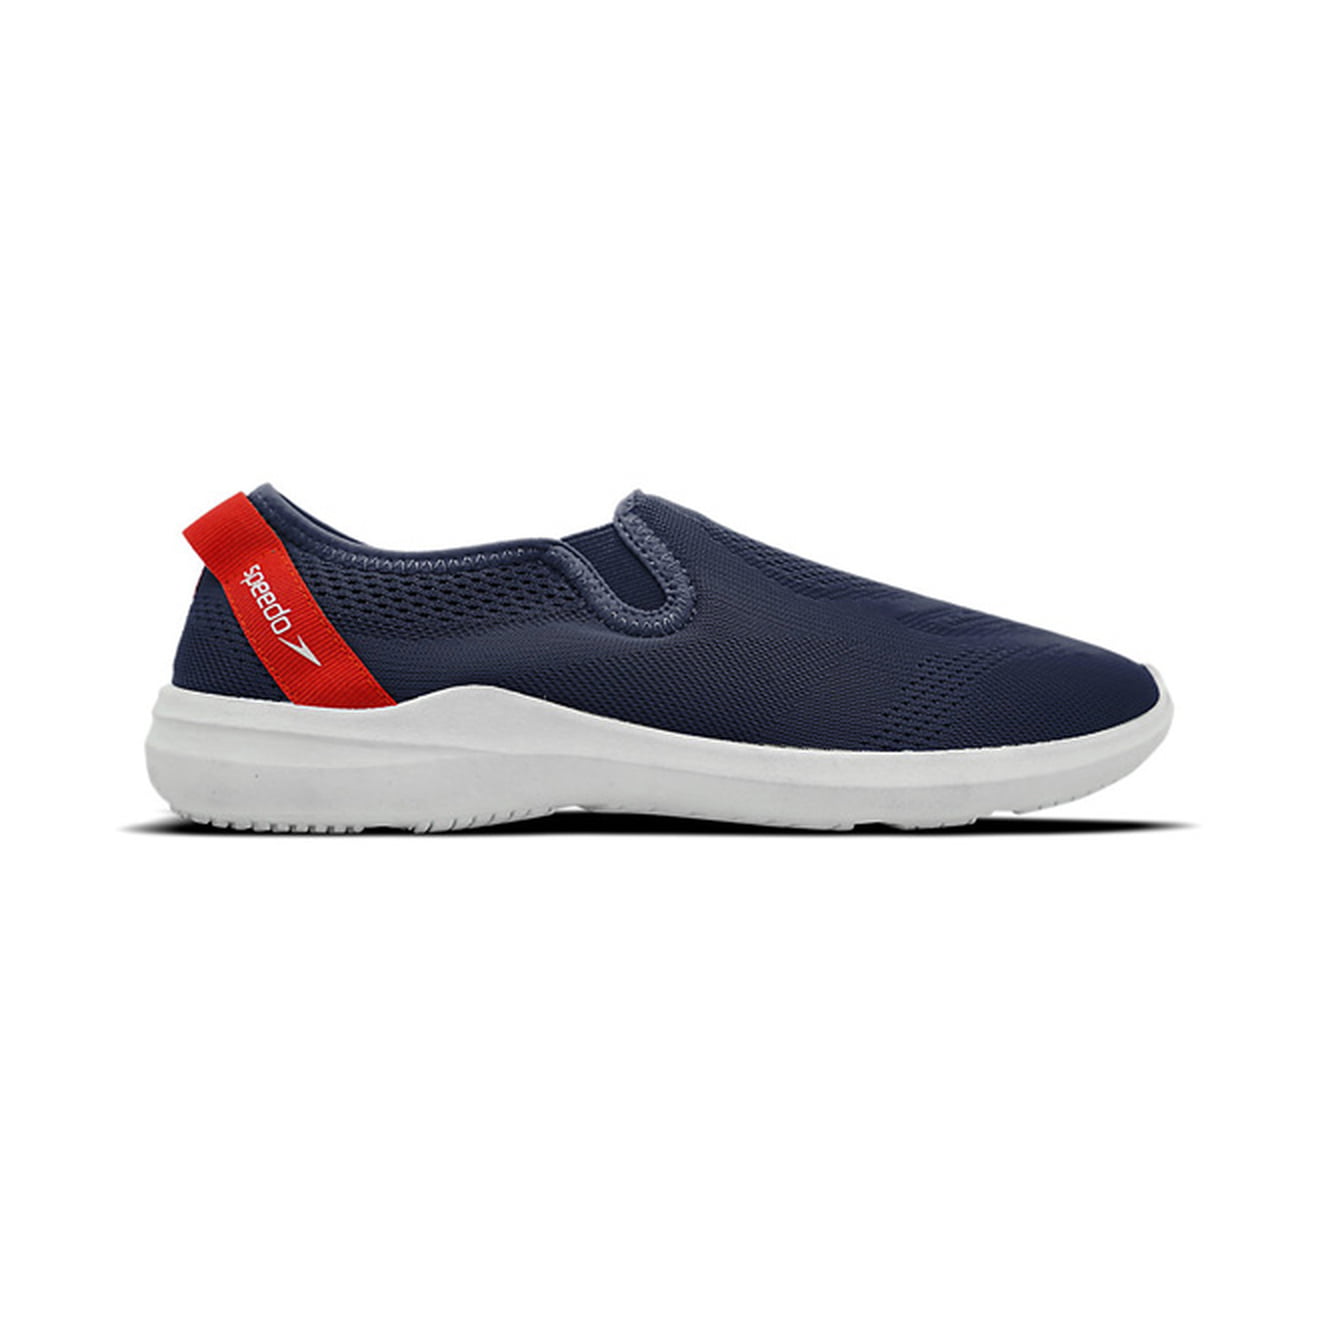 Speedo Men's Water Shoes SURFWALKER Pro Mesh Navy/White Size 12 ...